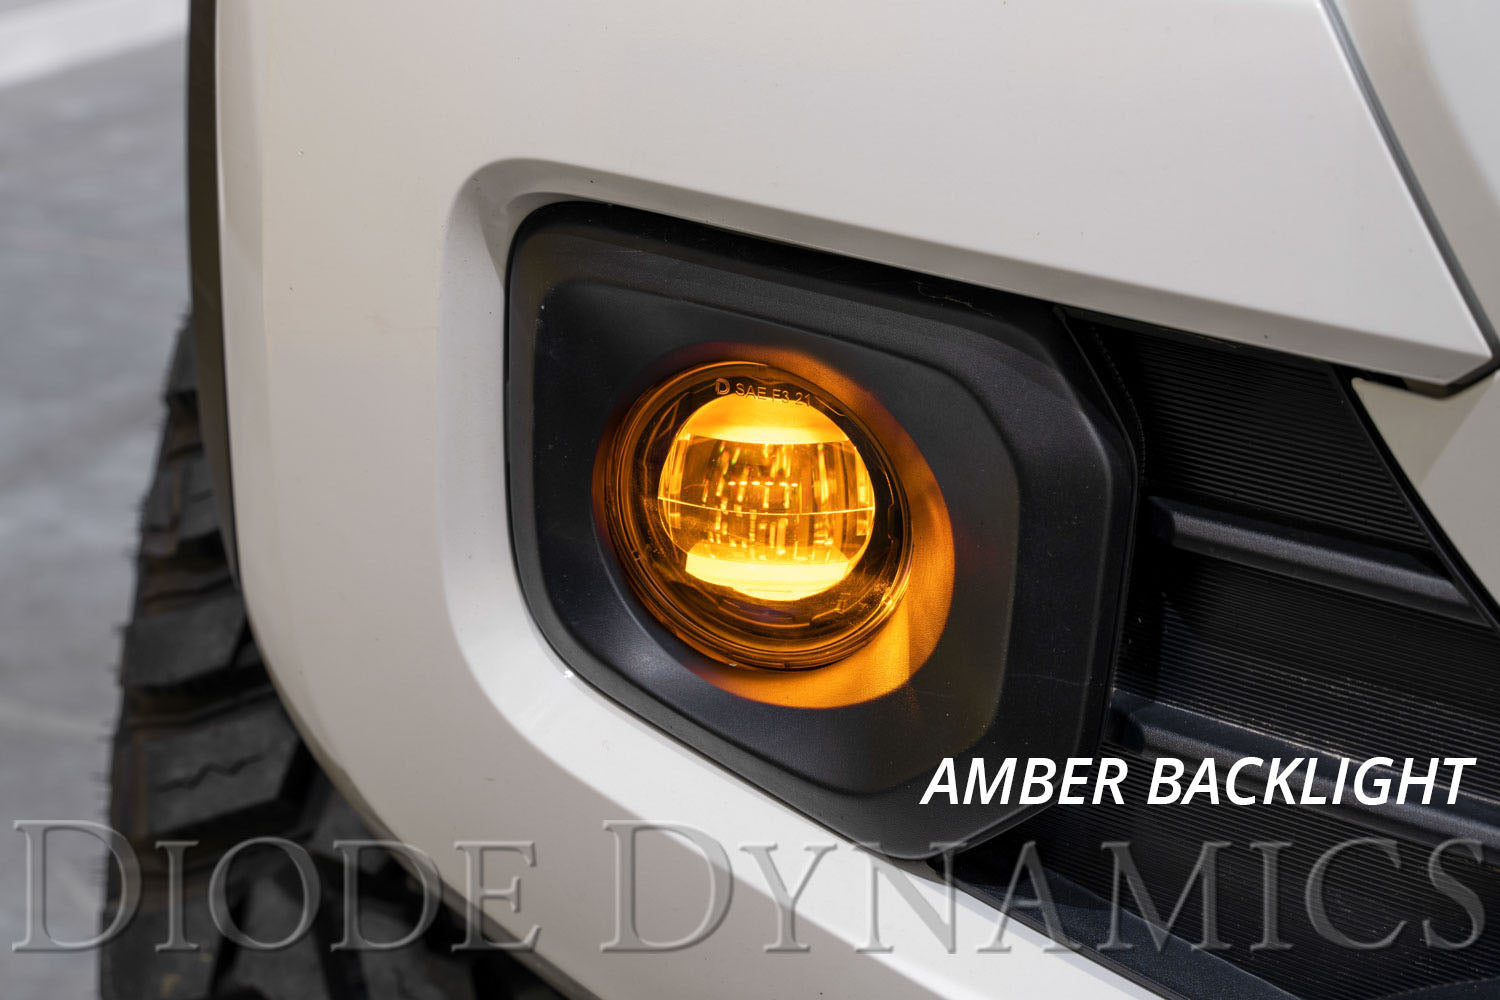 Elite Series Fog Lamps for 2012-2016 Toyota Prius C Pair Yellow 3000K Diode Dynamics